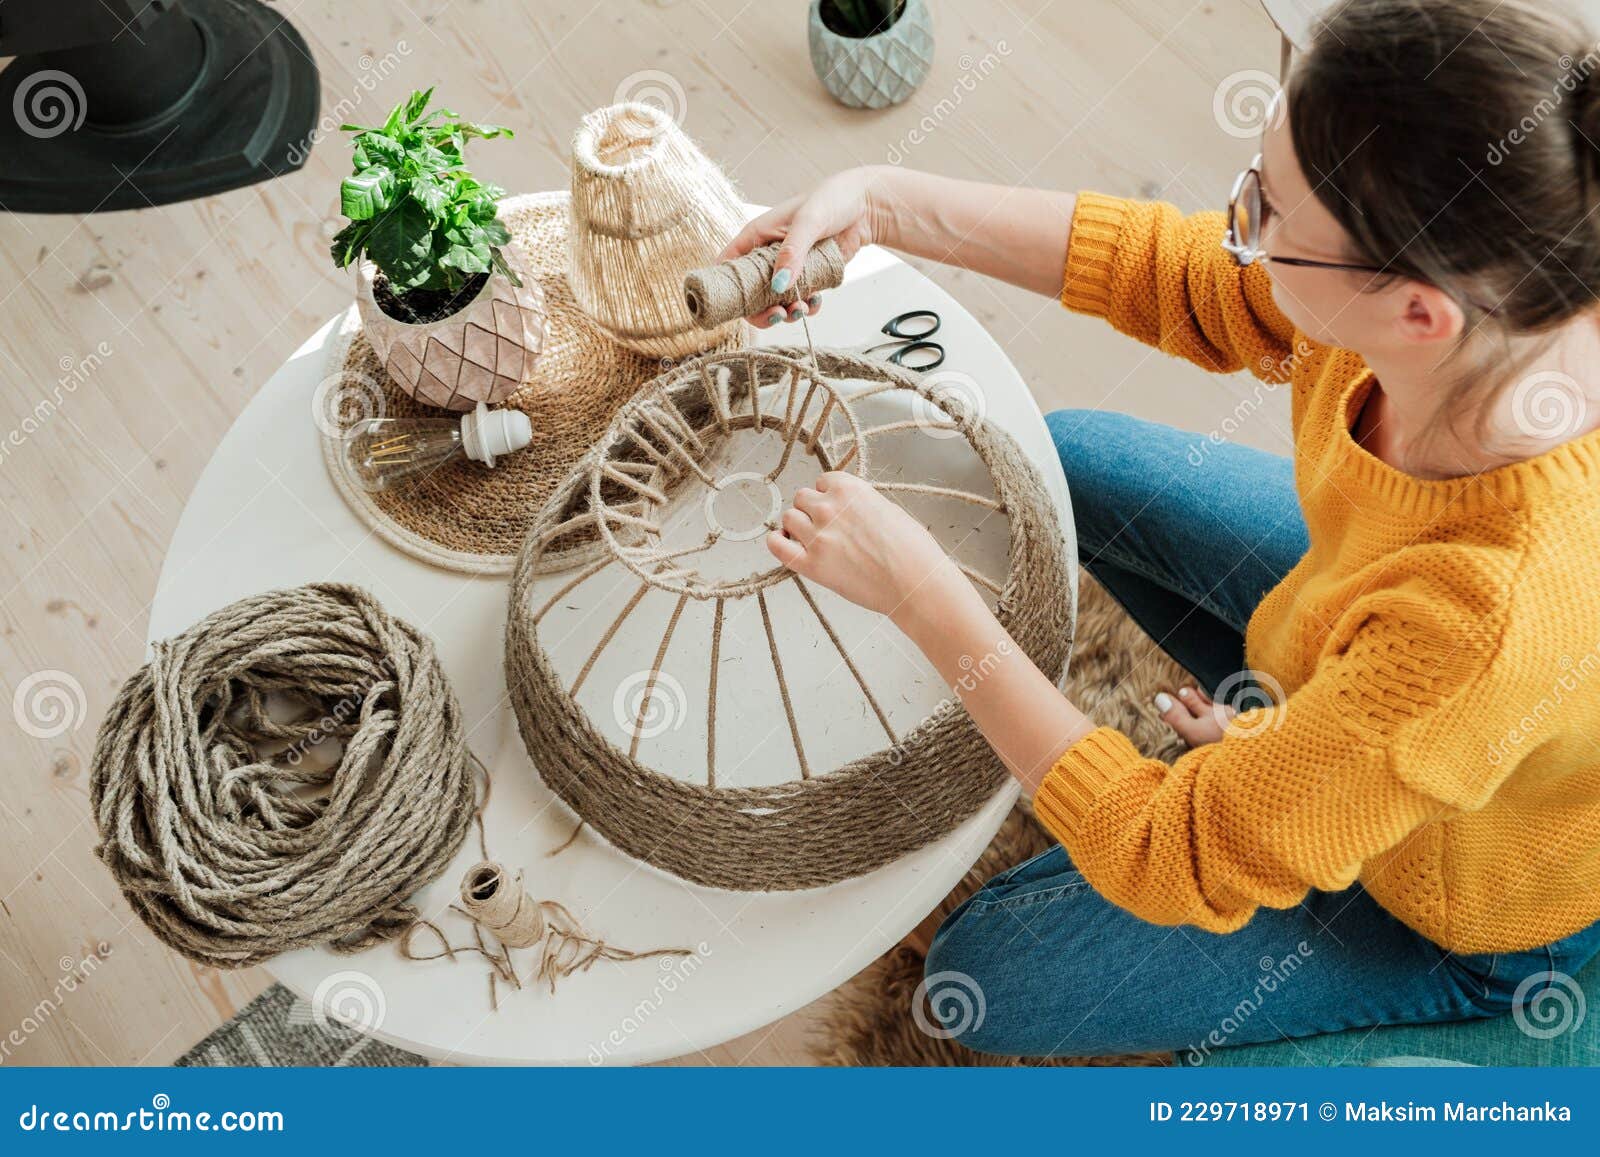 Woman Makes Handmade Diy Lamp from Jute Rope Stock Image - Image of  hobbies, accessory: 229718971